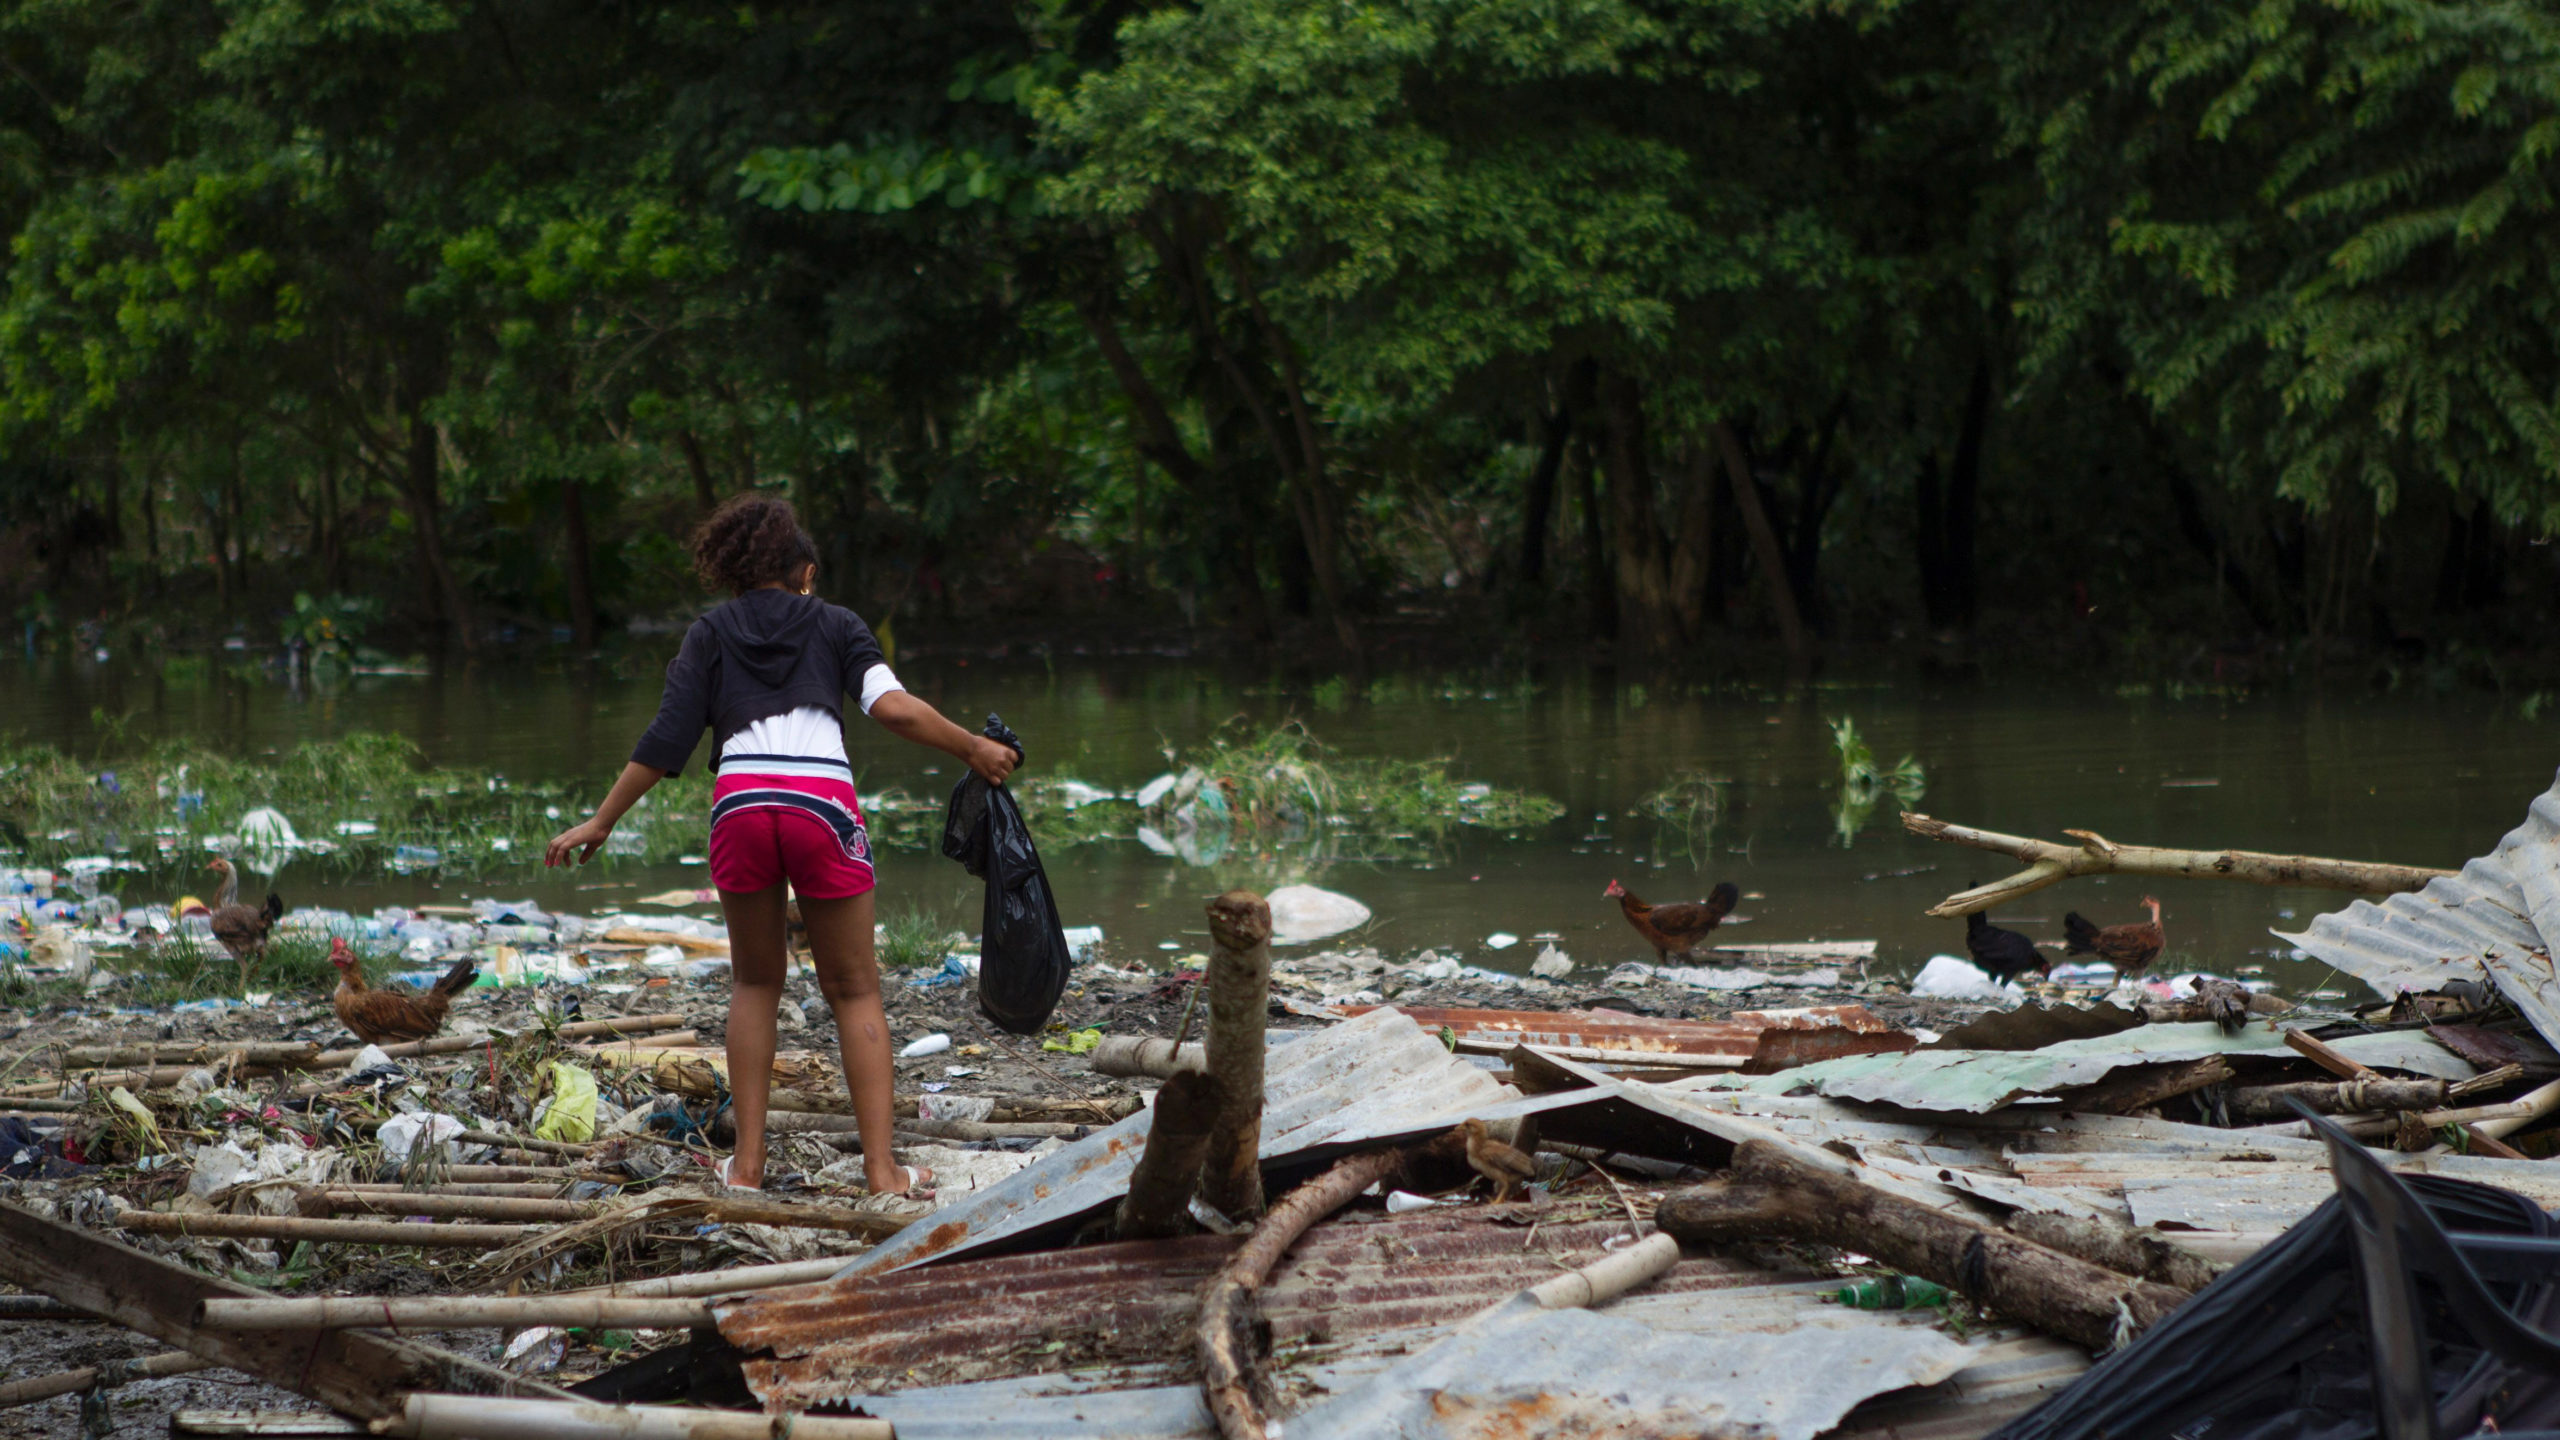 Photos Of Hurricane Matthew’s Devastation In The Caribbean Are Heartbreaking